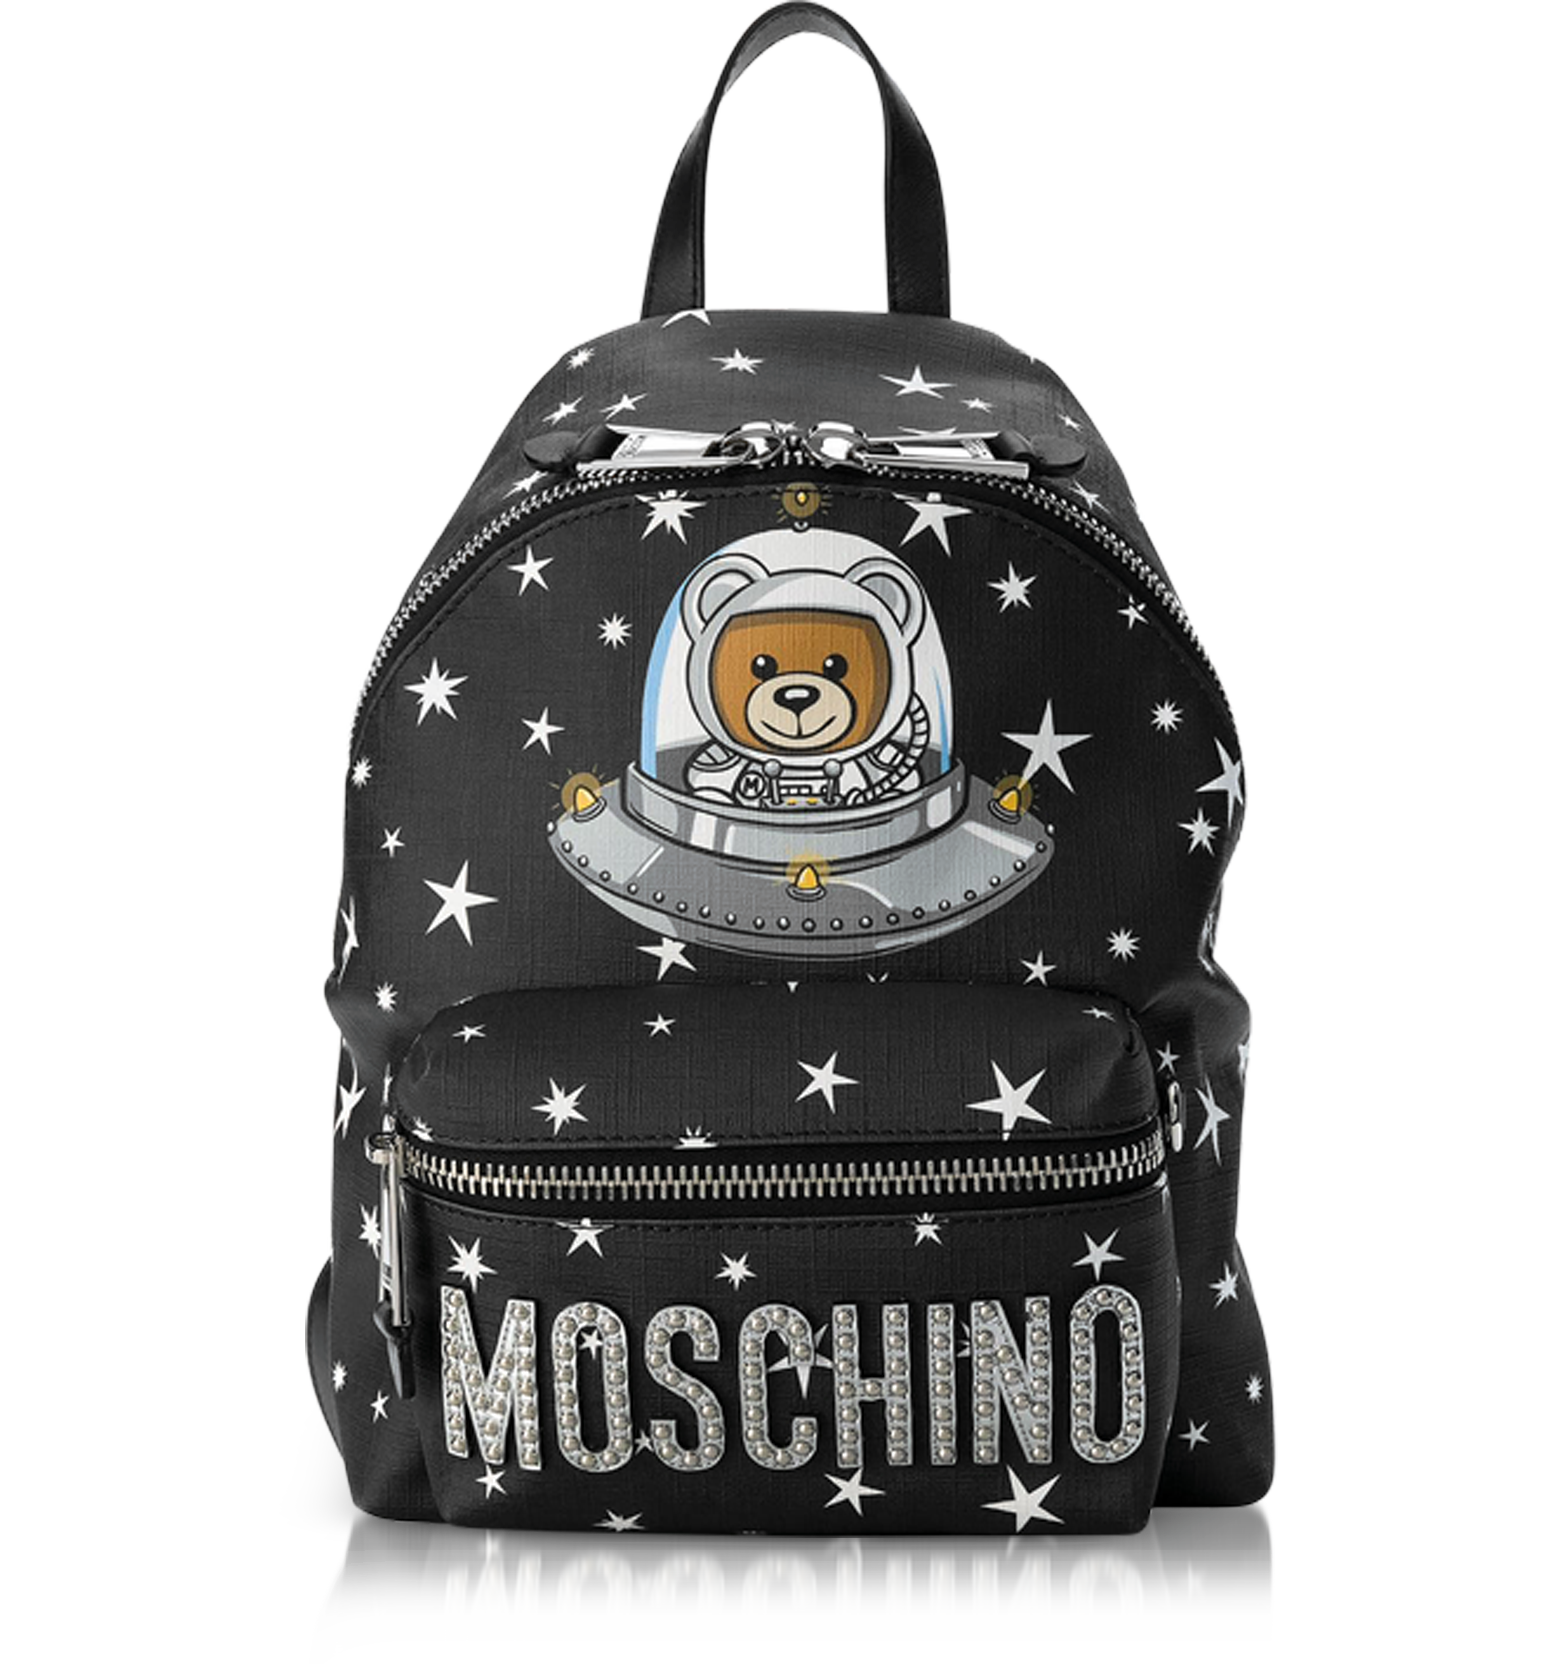 moschino backpack bear